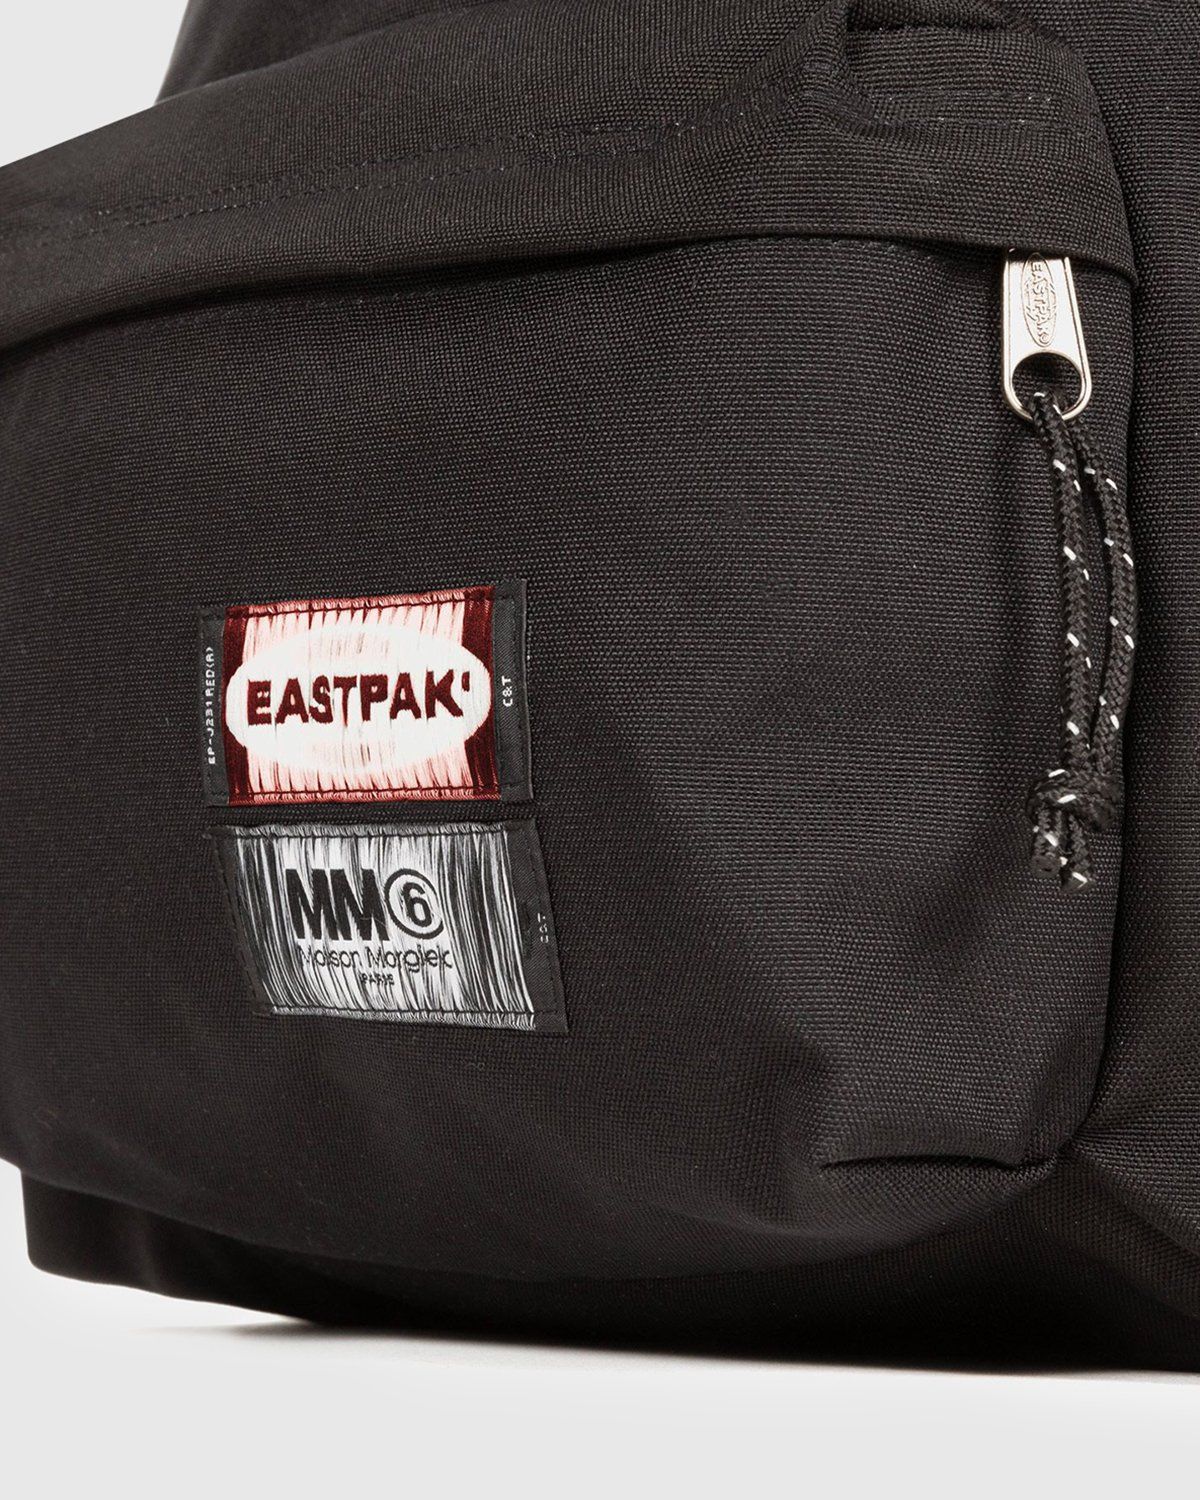 MM6 Maison Margiela x Eastpak – Padded Backpack Black - Bags - Black - Image 9